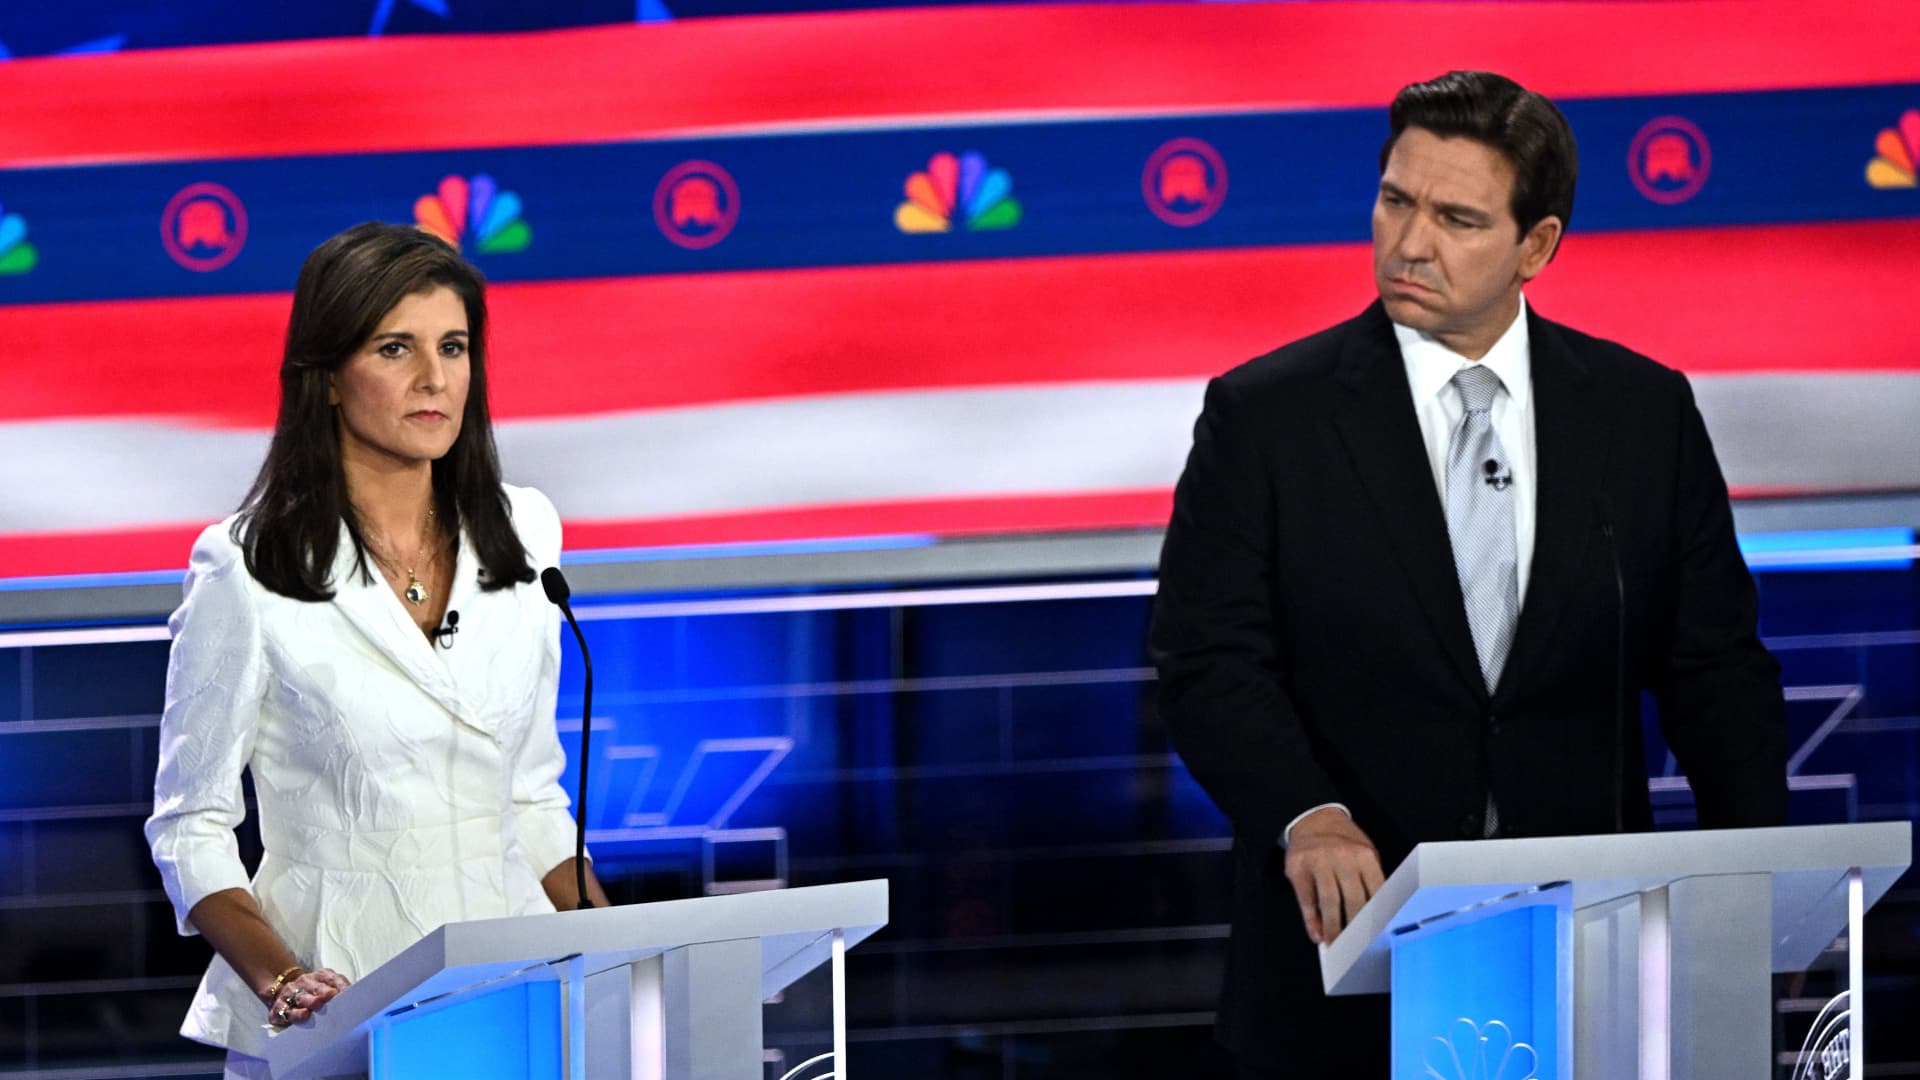 Haley’s Wall Street donor surge draws fire ahead of GOP debate